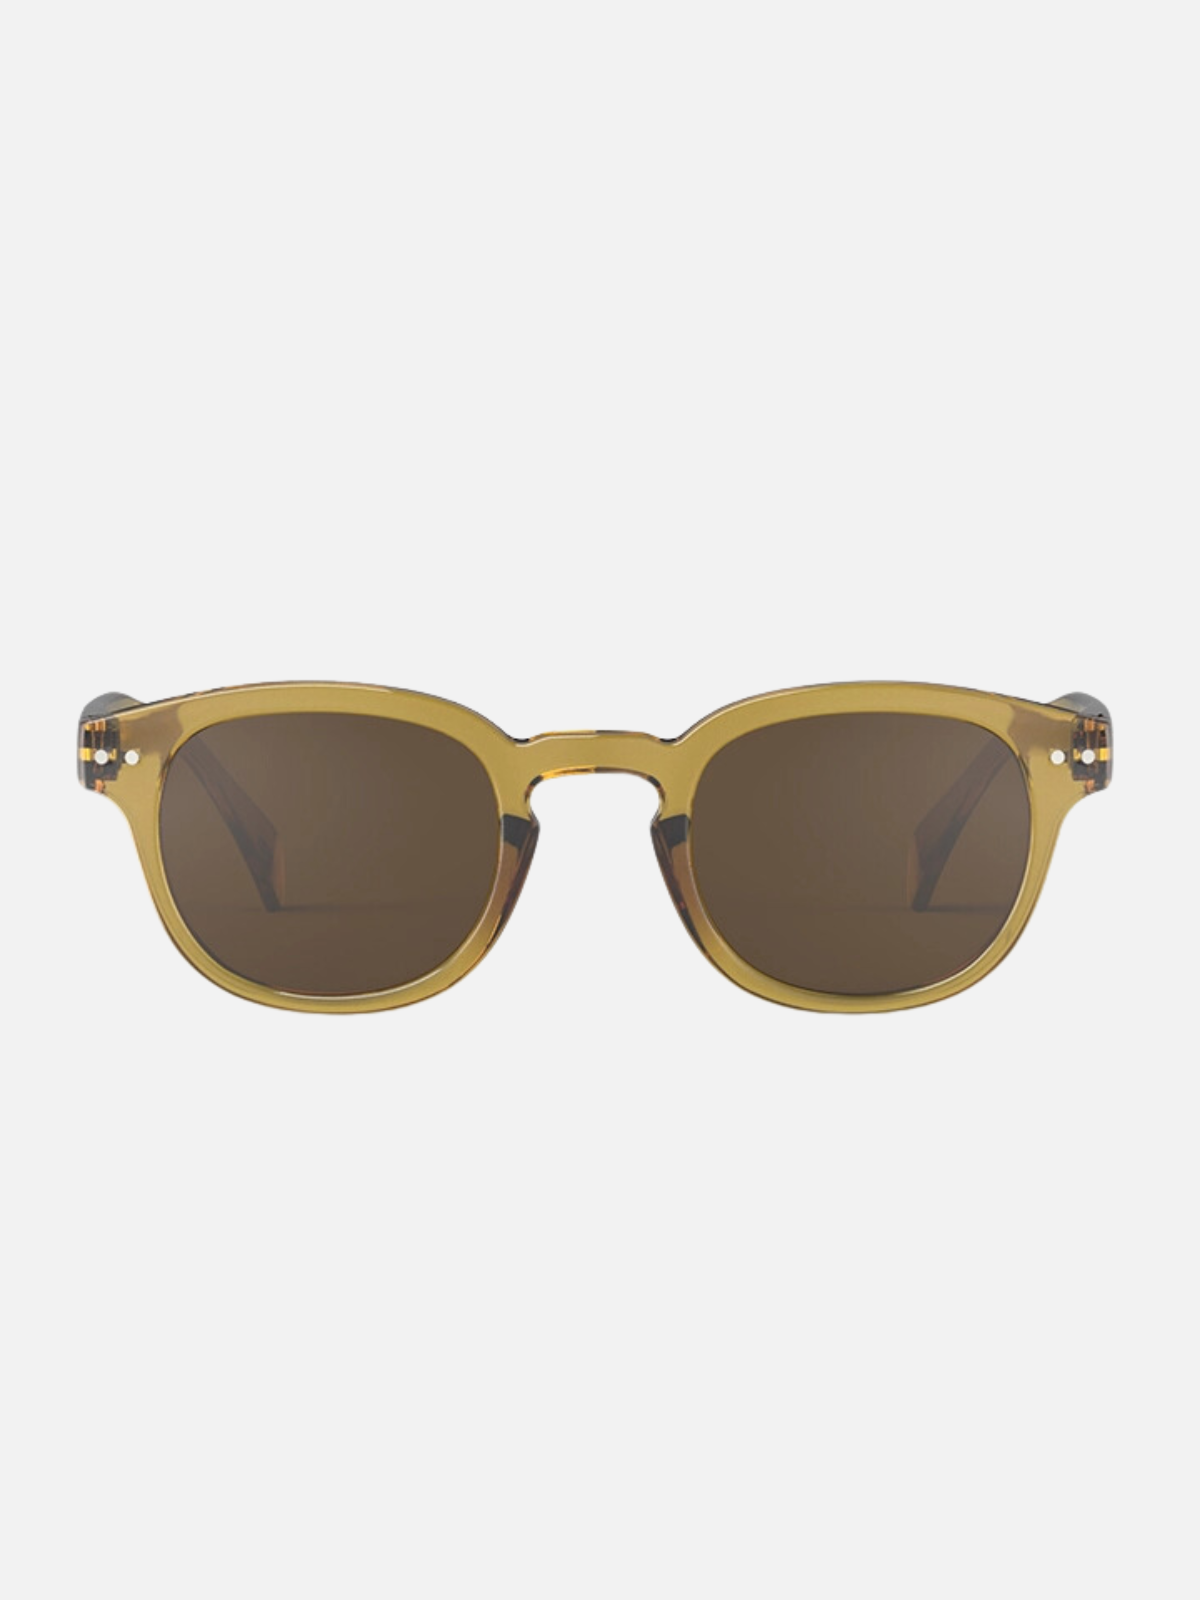 izipizi retro #C sunglasses round shape smaller frame rubberized frames flex hinges kempt athens ga georgia men's clothing store